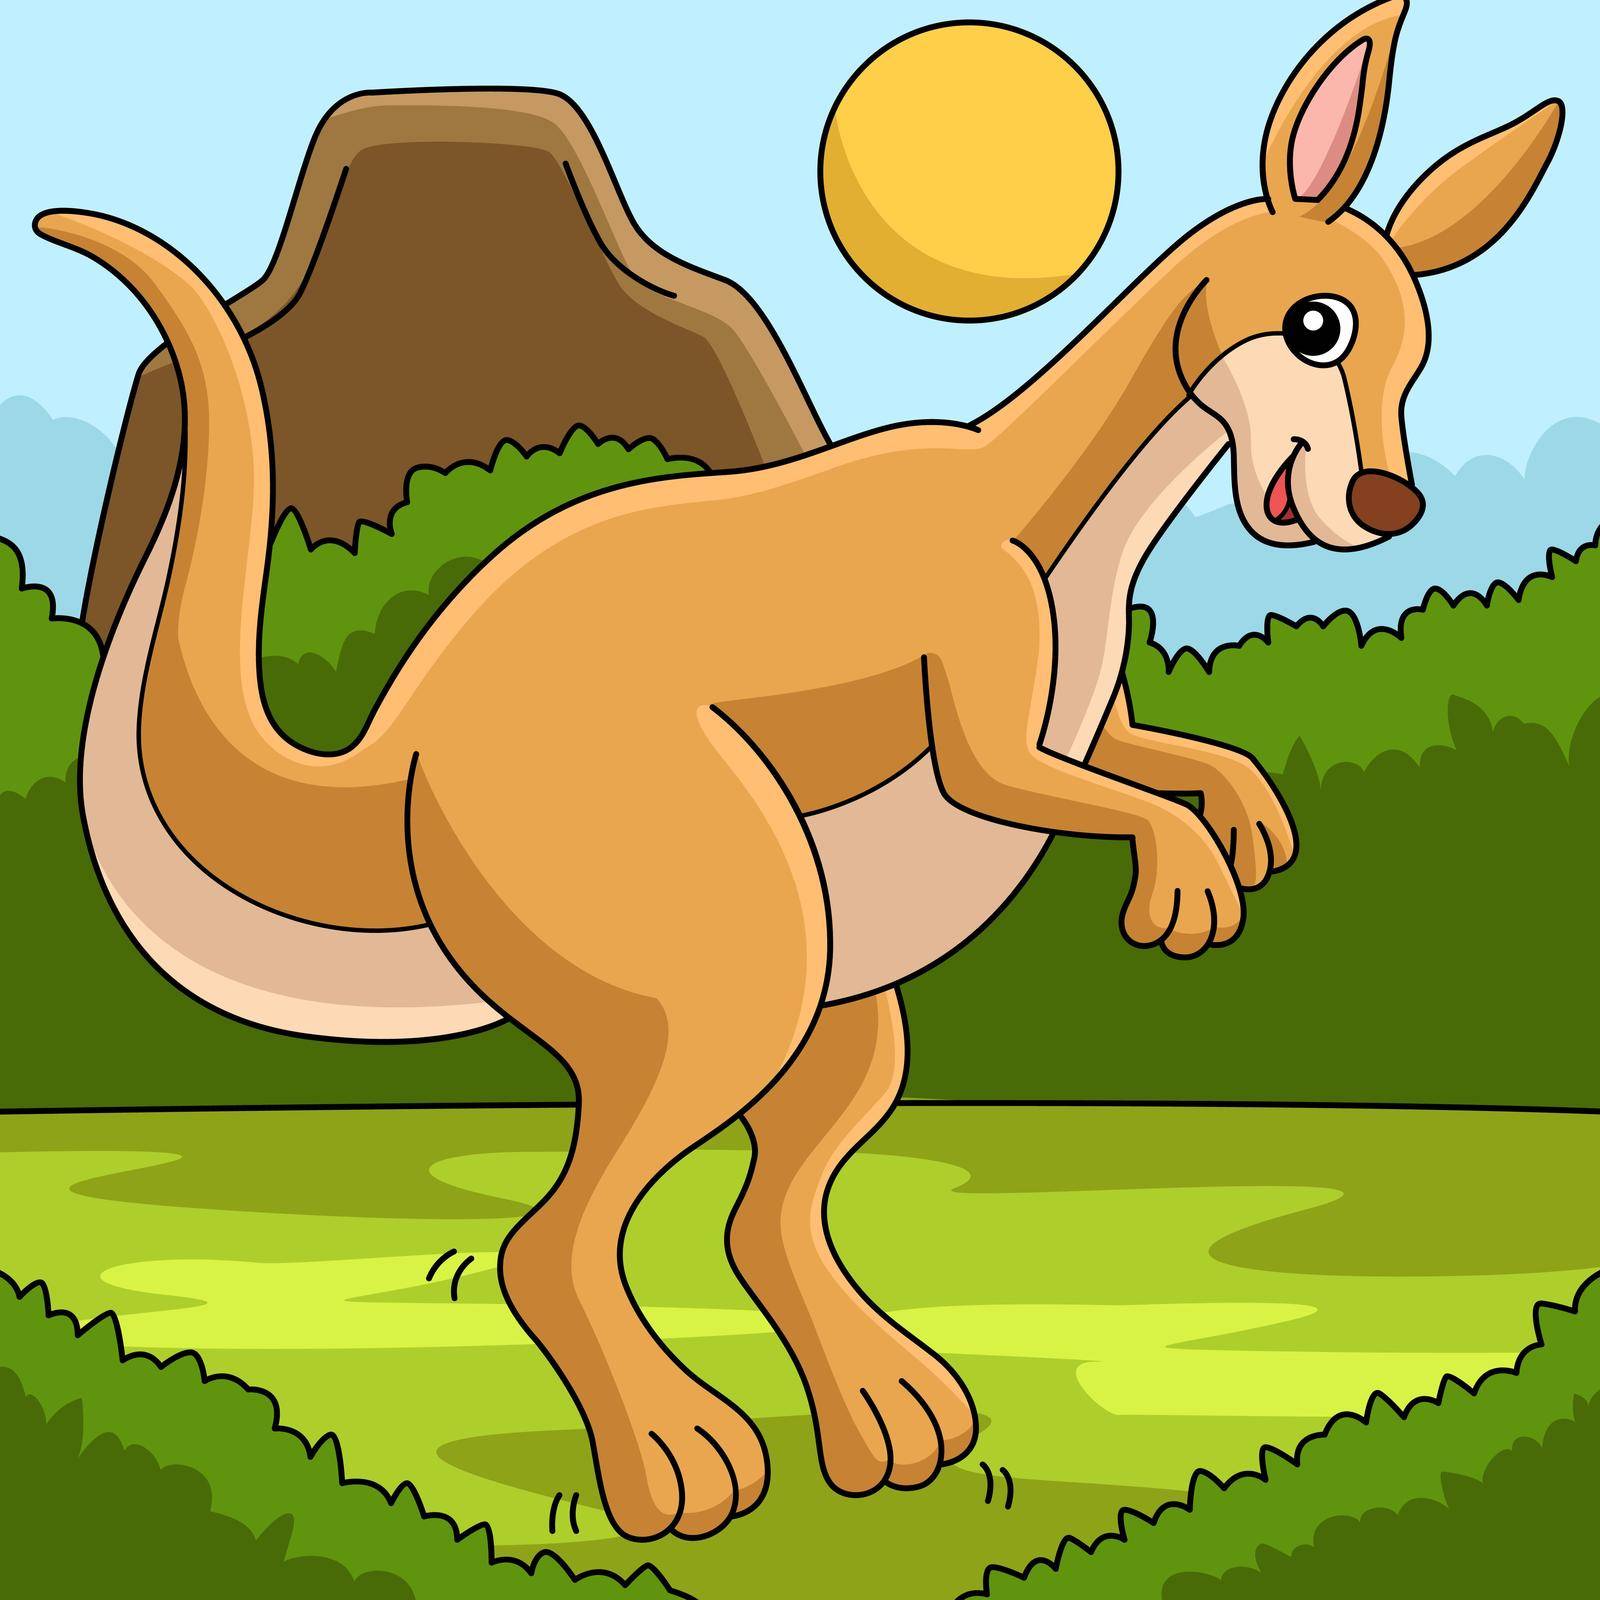 This cartoon illustration shows a kangaroo animal illustration.